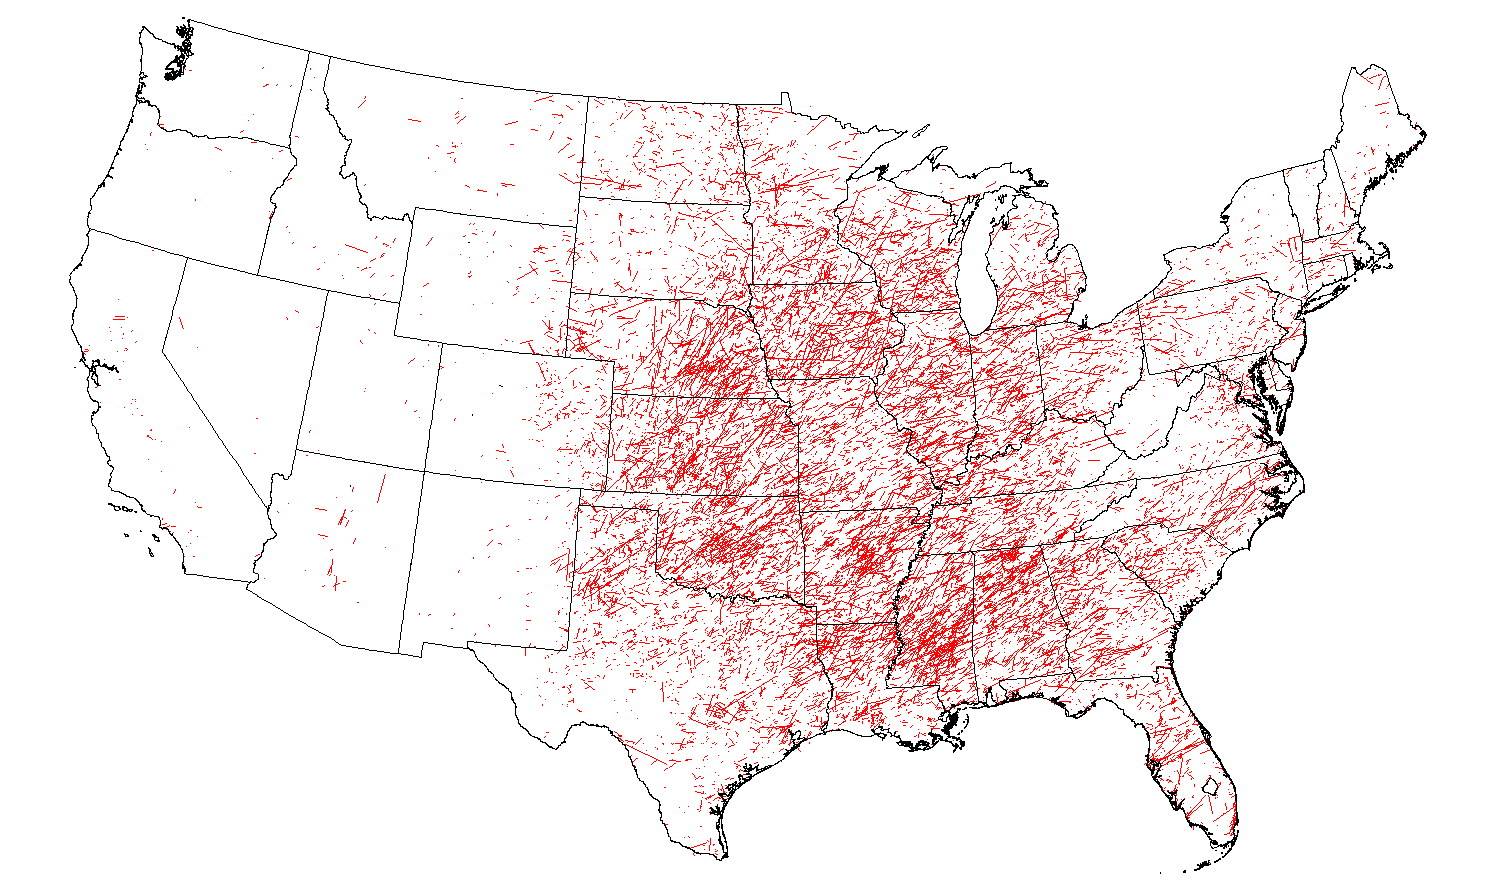 U.S. Tornado Tracks 1950-2015 (SPC)